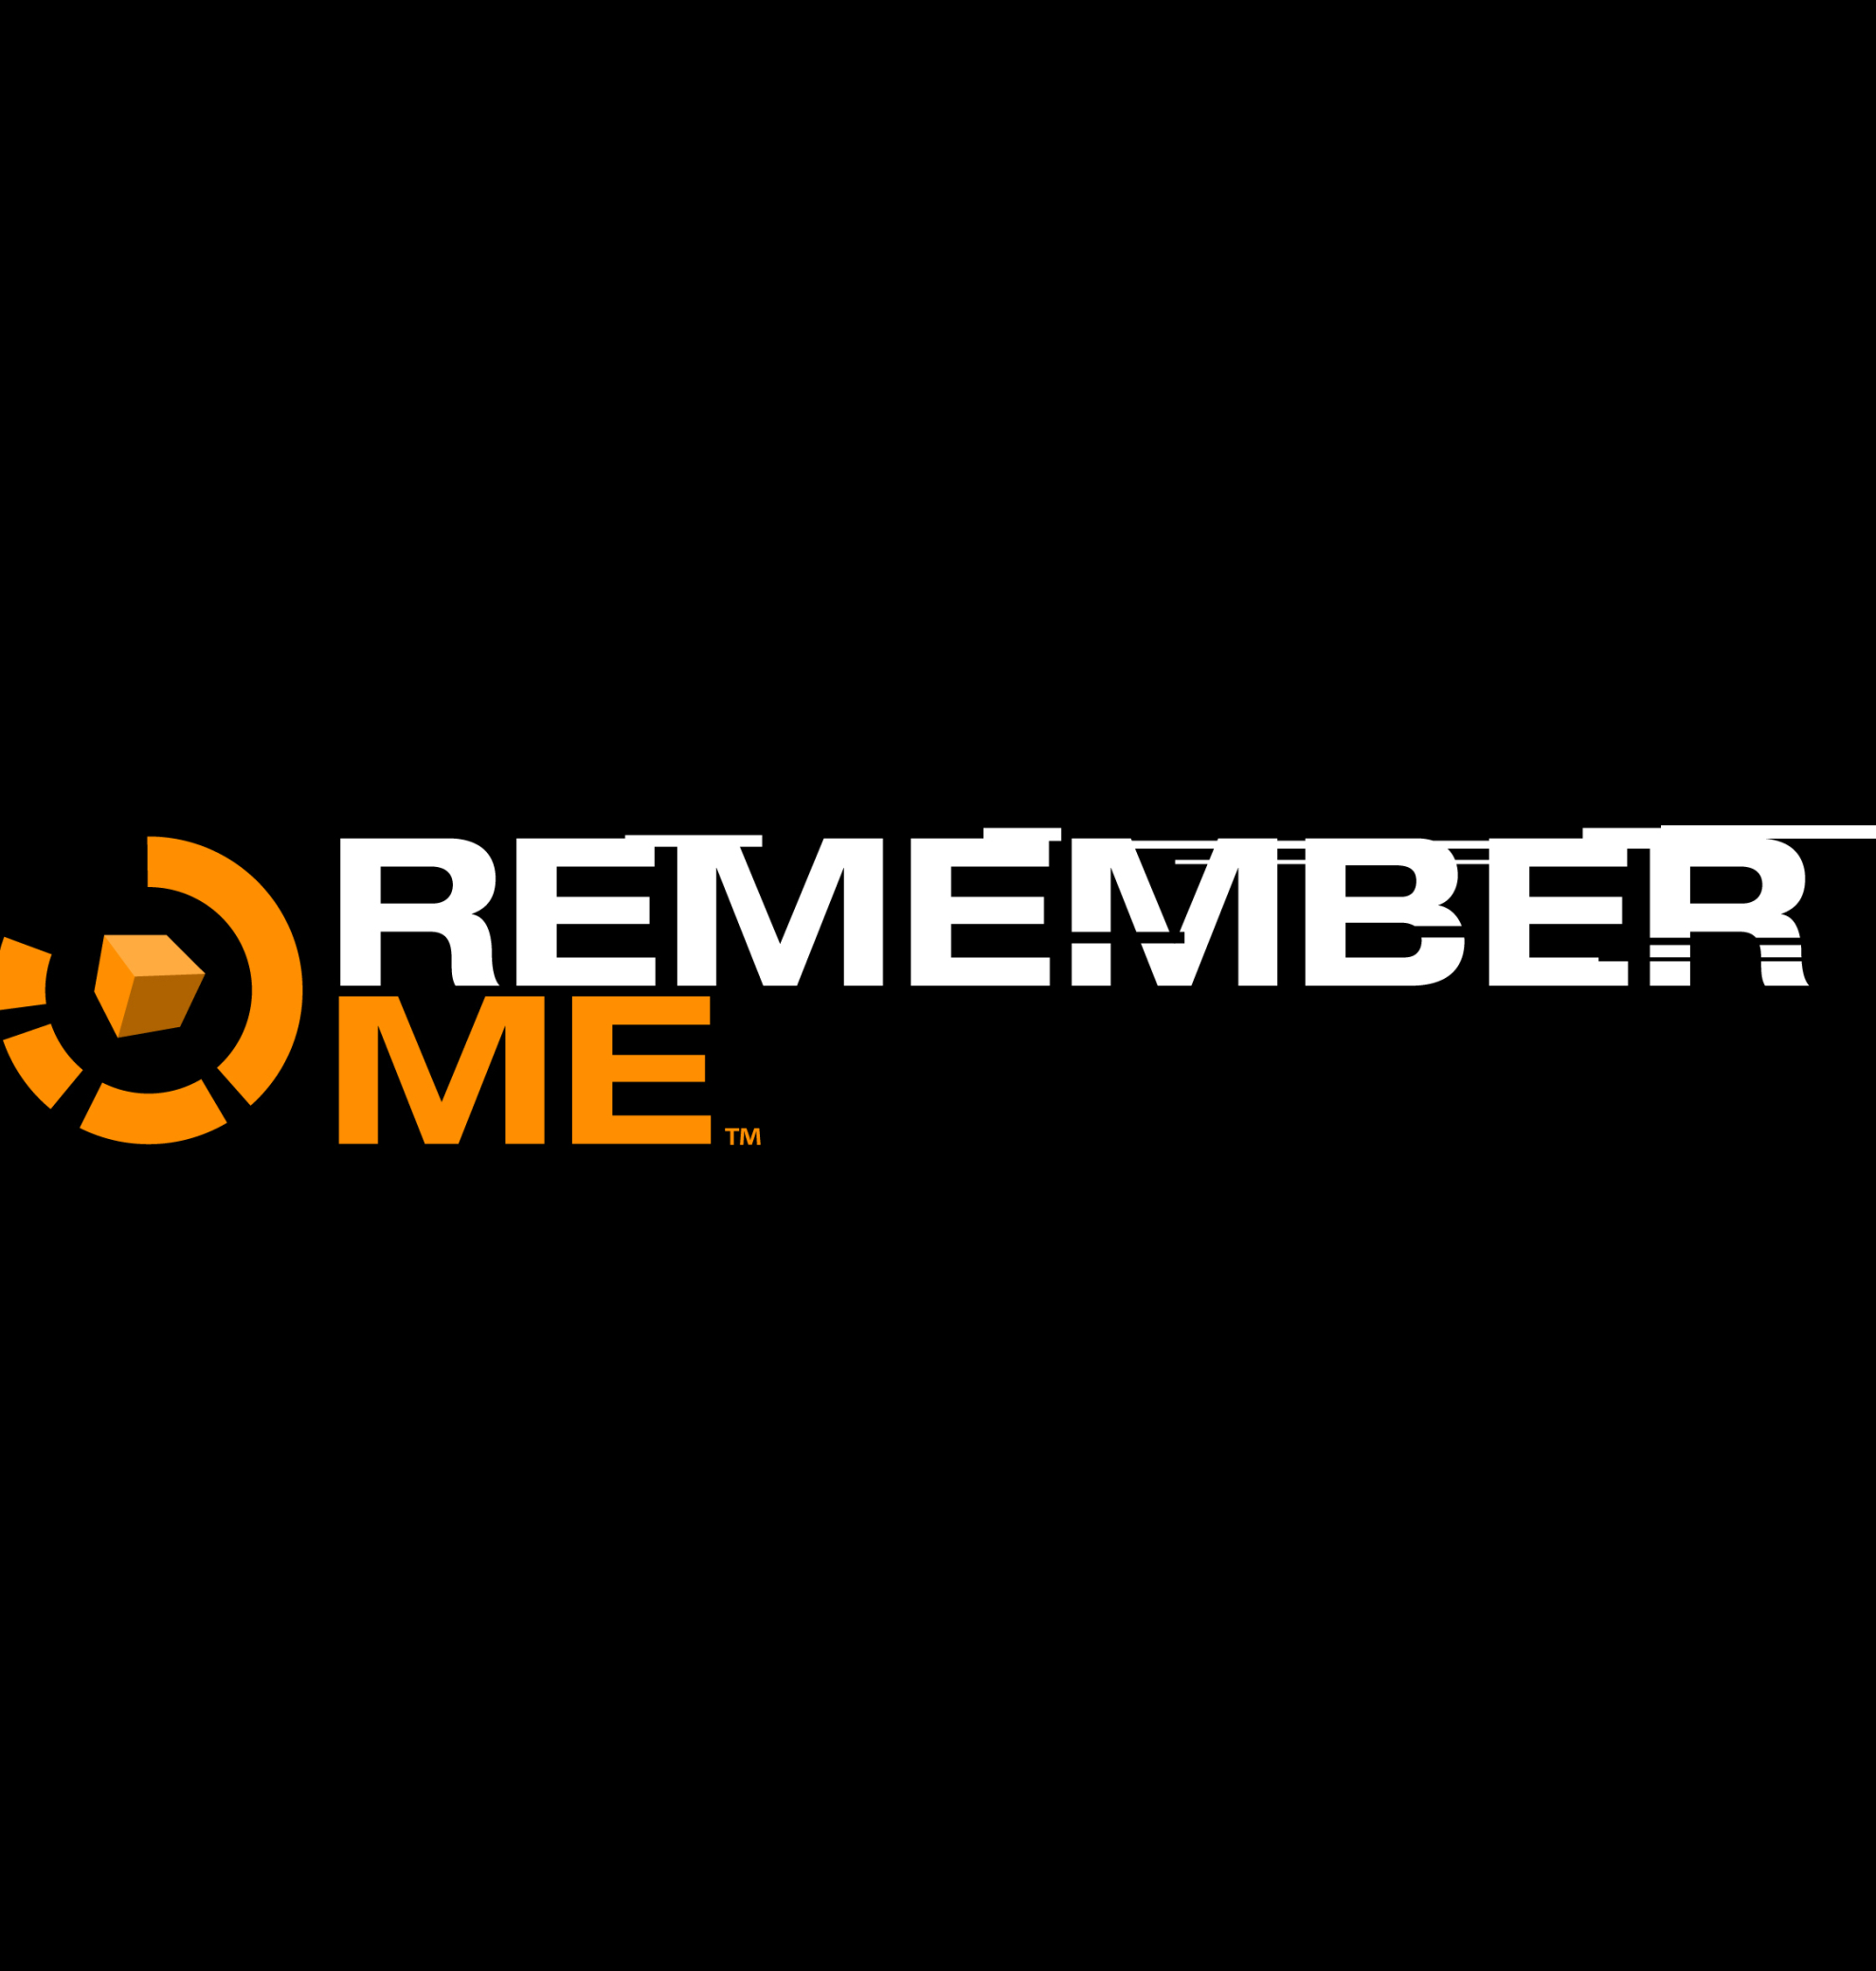 Remember videos. Remember me. Dontnod logo.